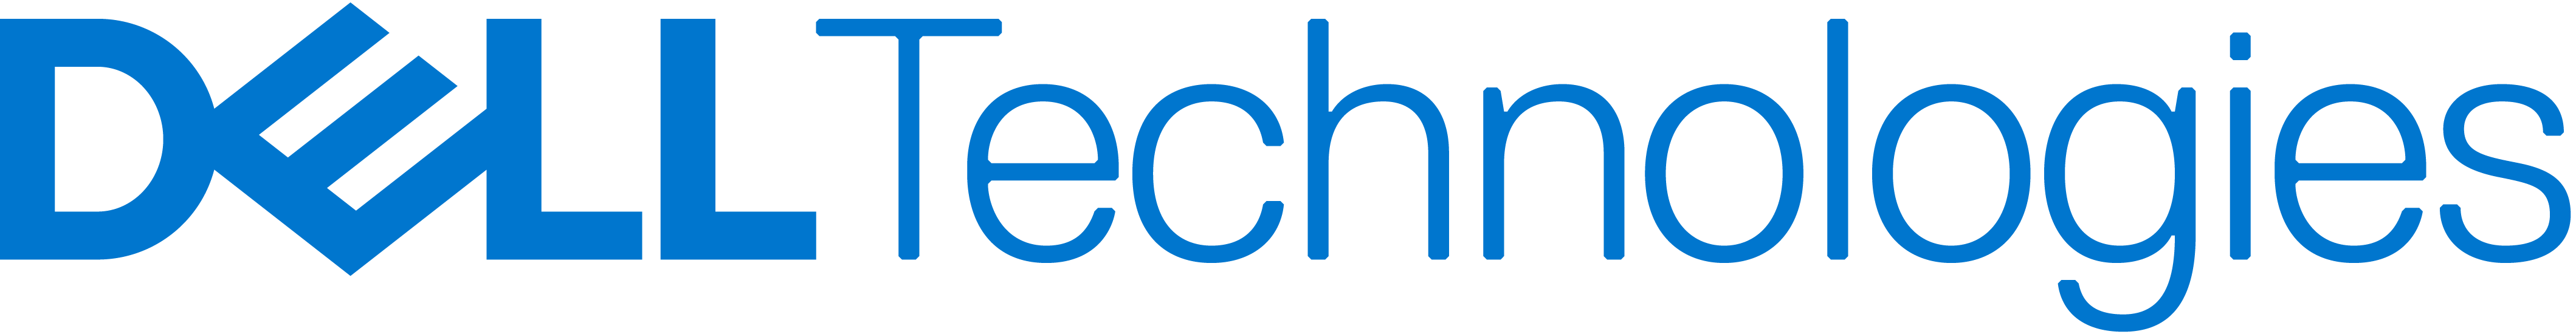 Logo in blue reads "DELL Technologies"